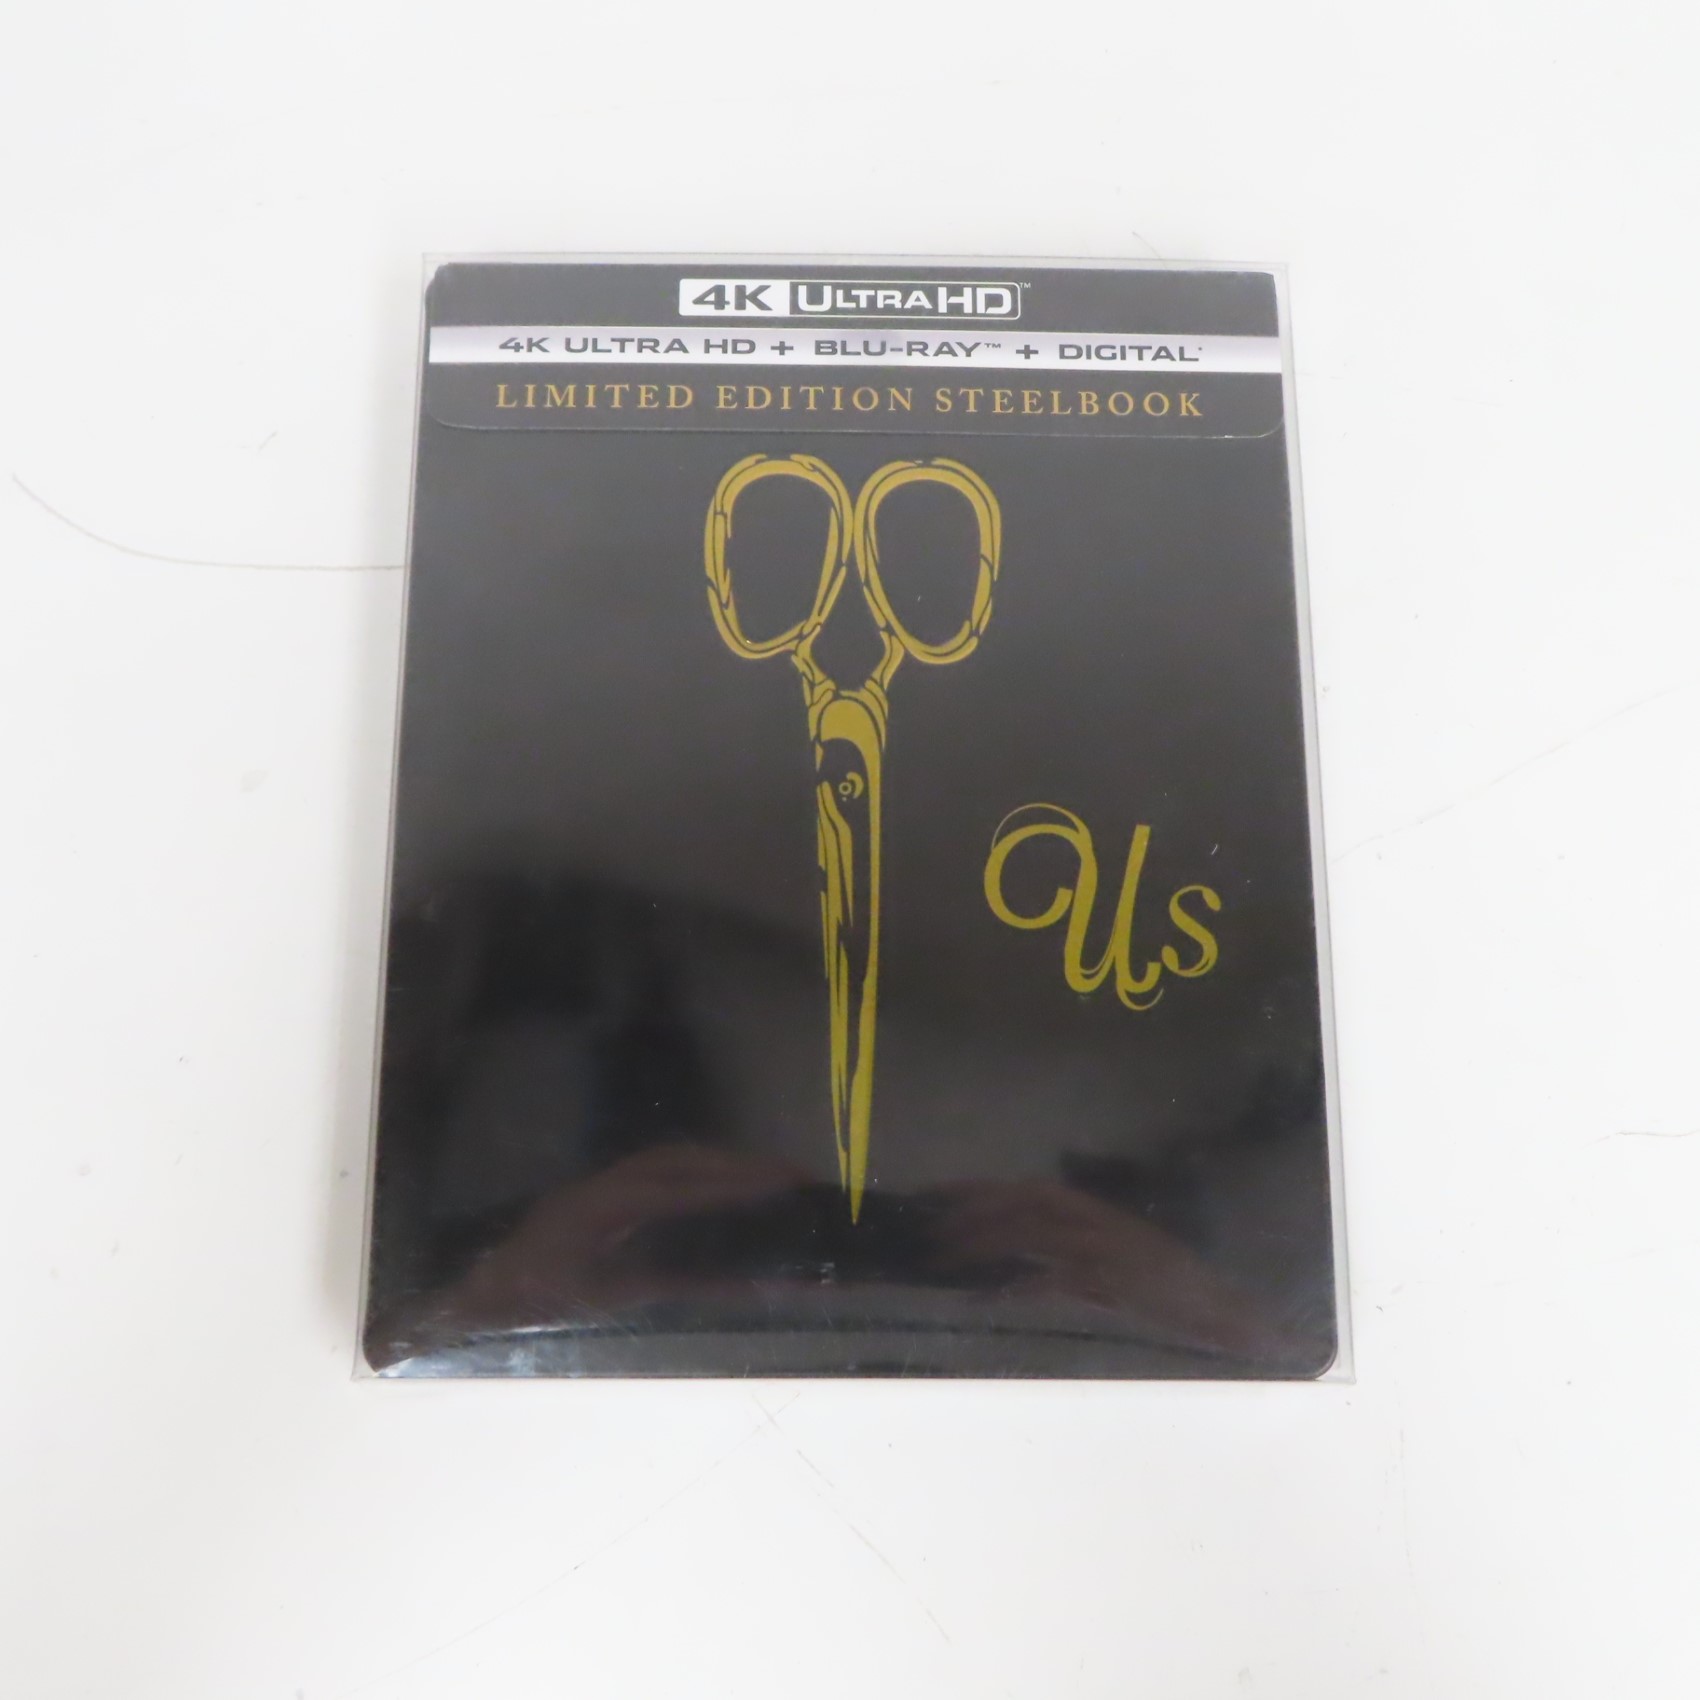 Us 4K UHD & Blu-ray 2-Disc Steelbook Limited Edition